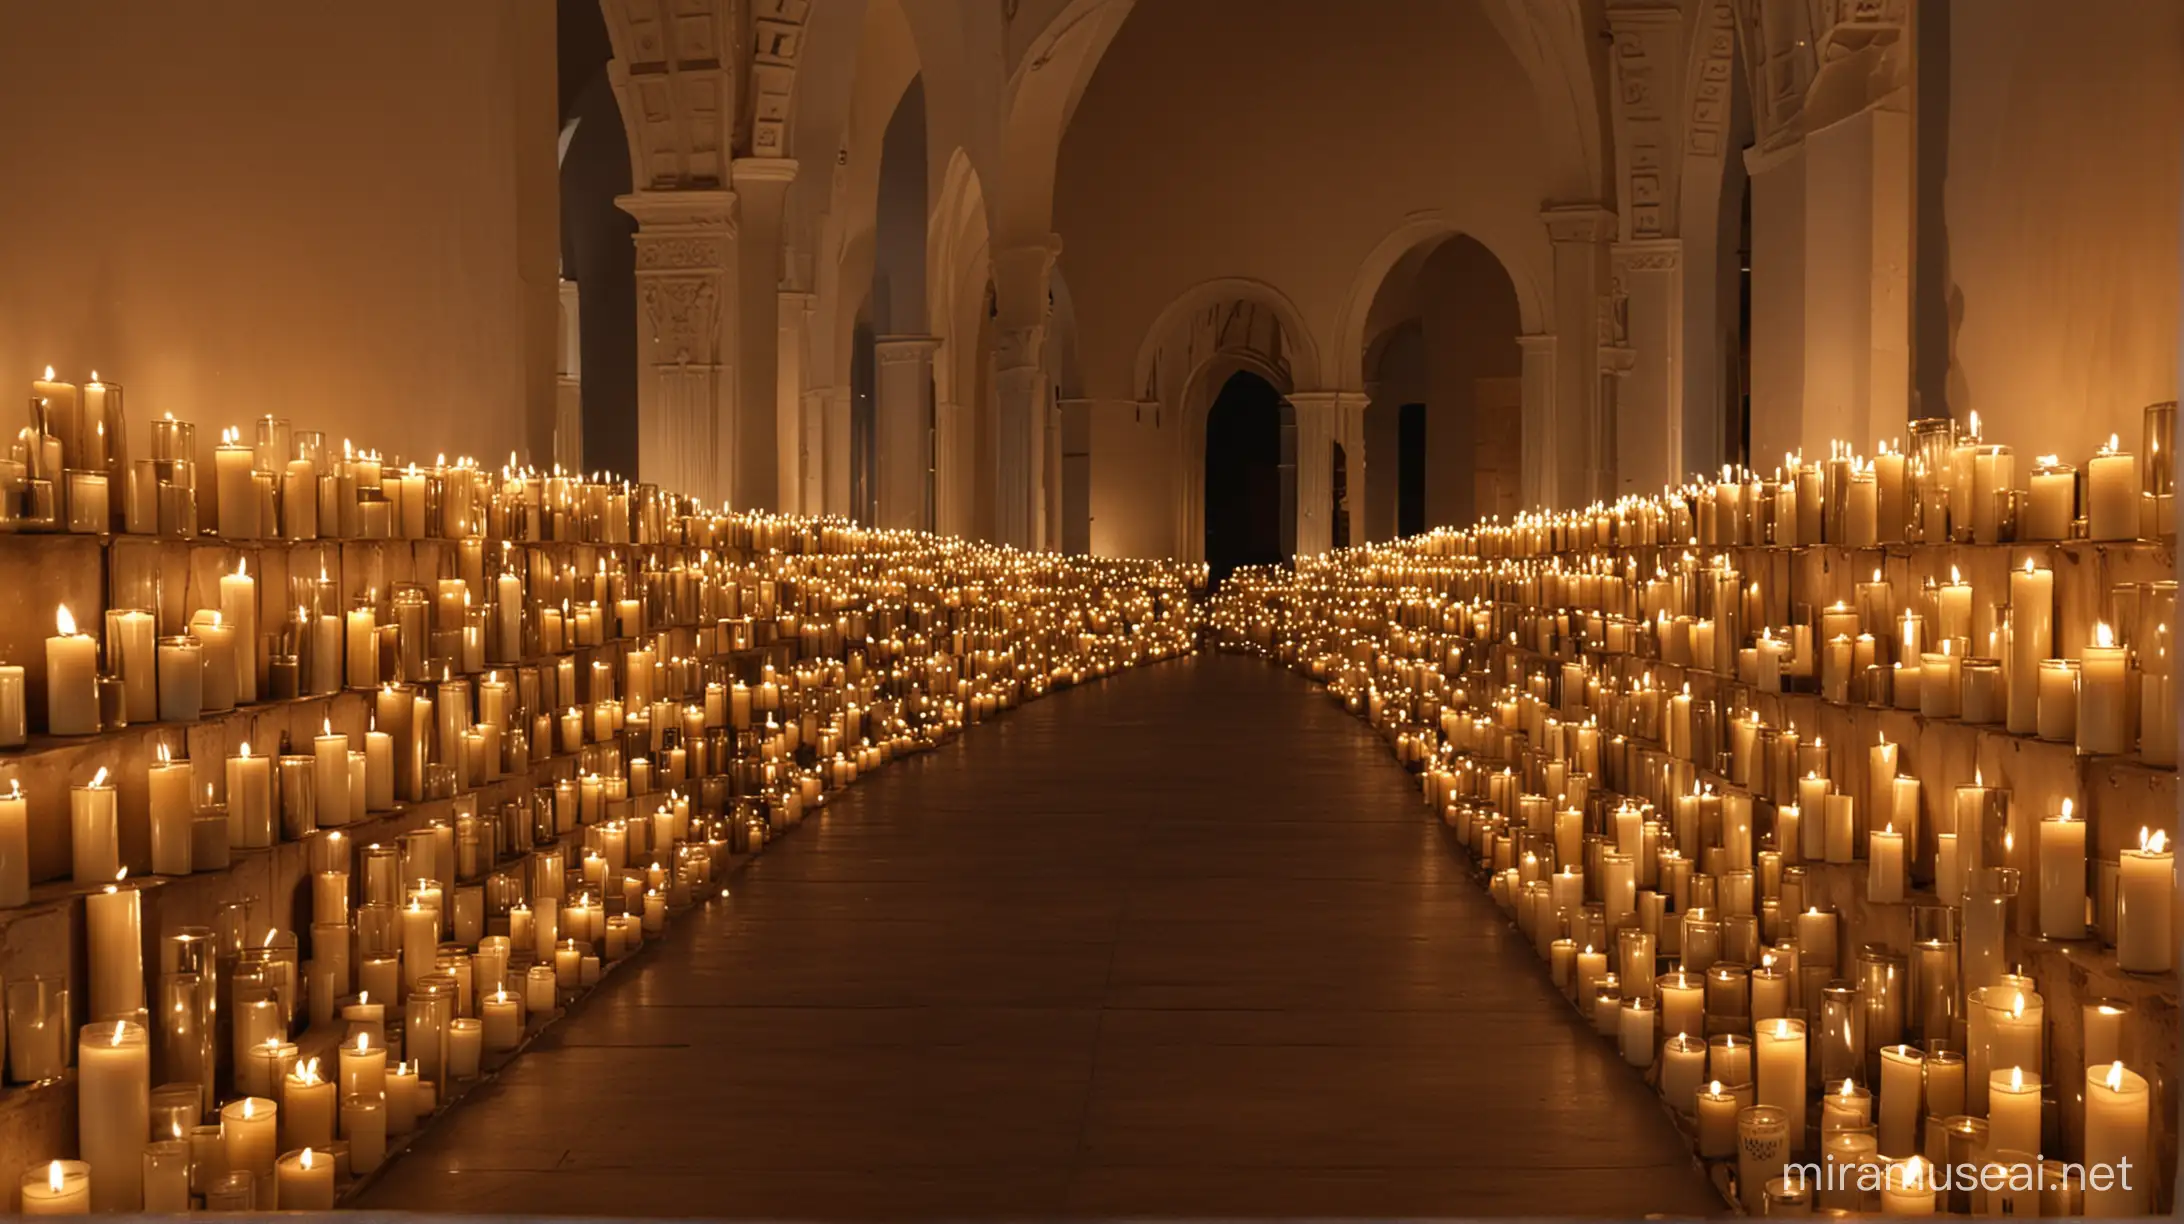 Elegant Candlelit Hallway with Warm Glow